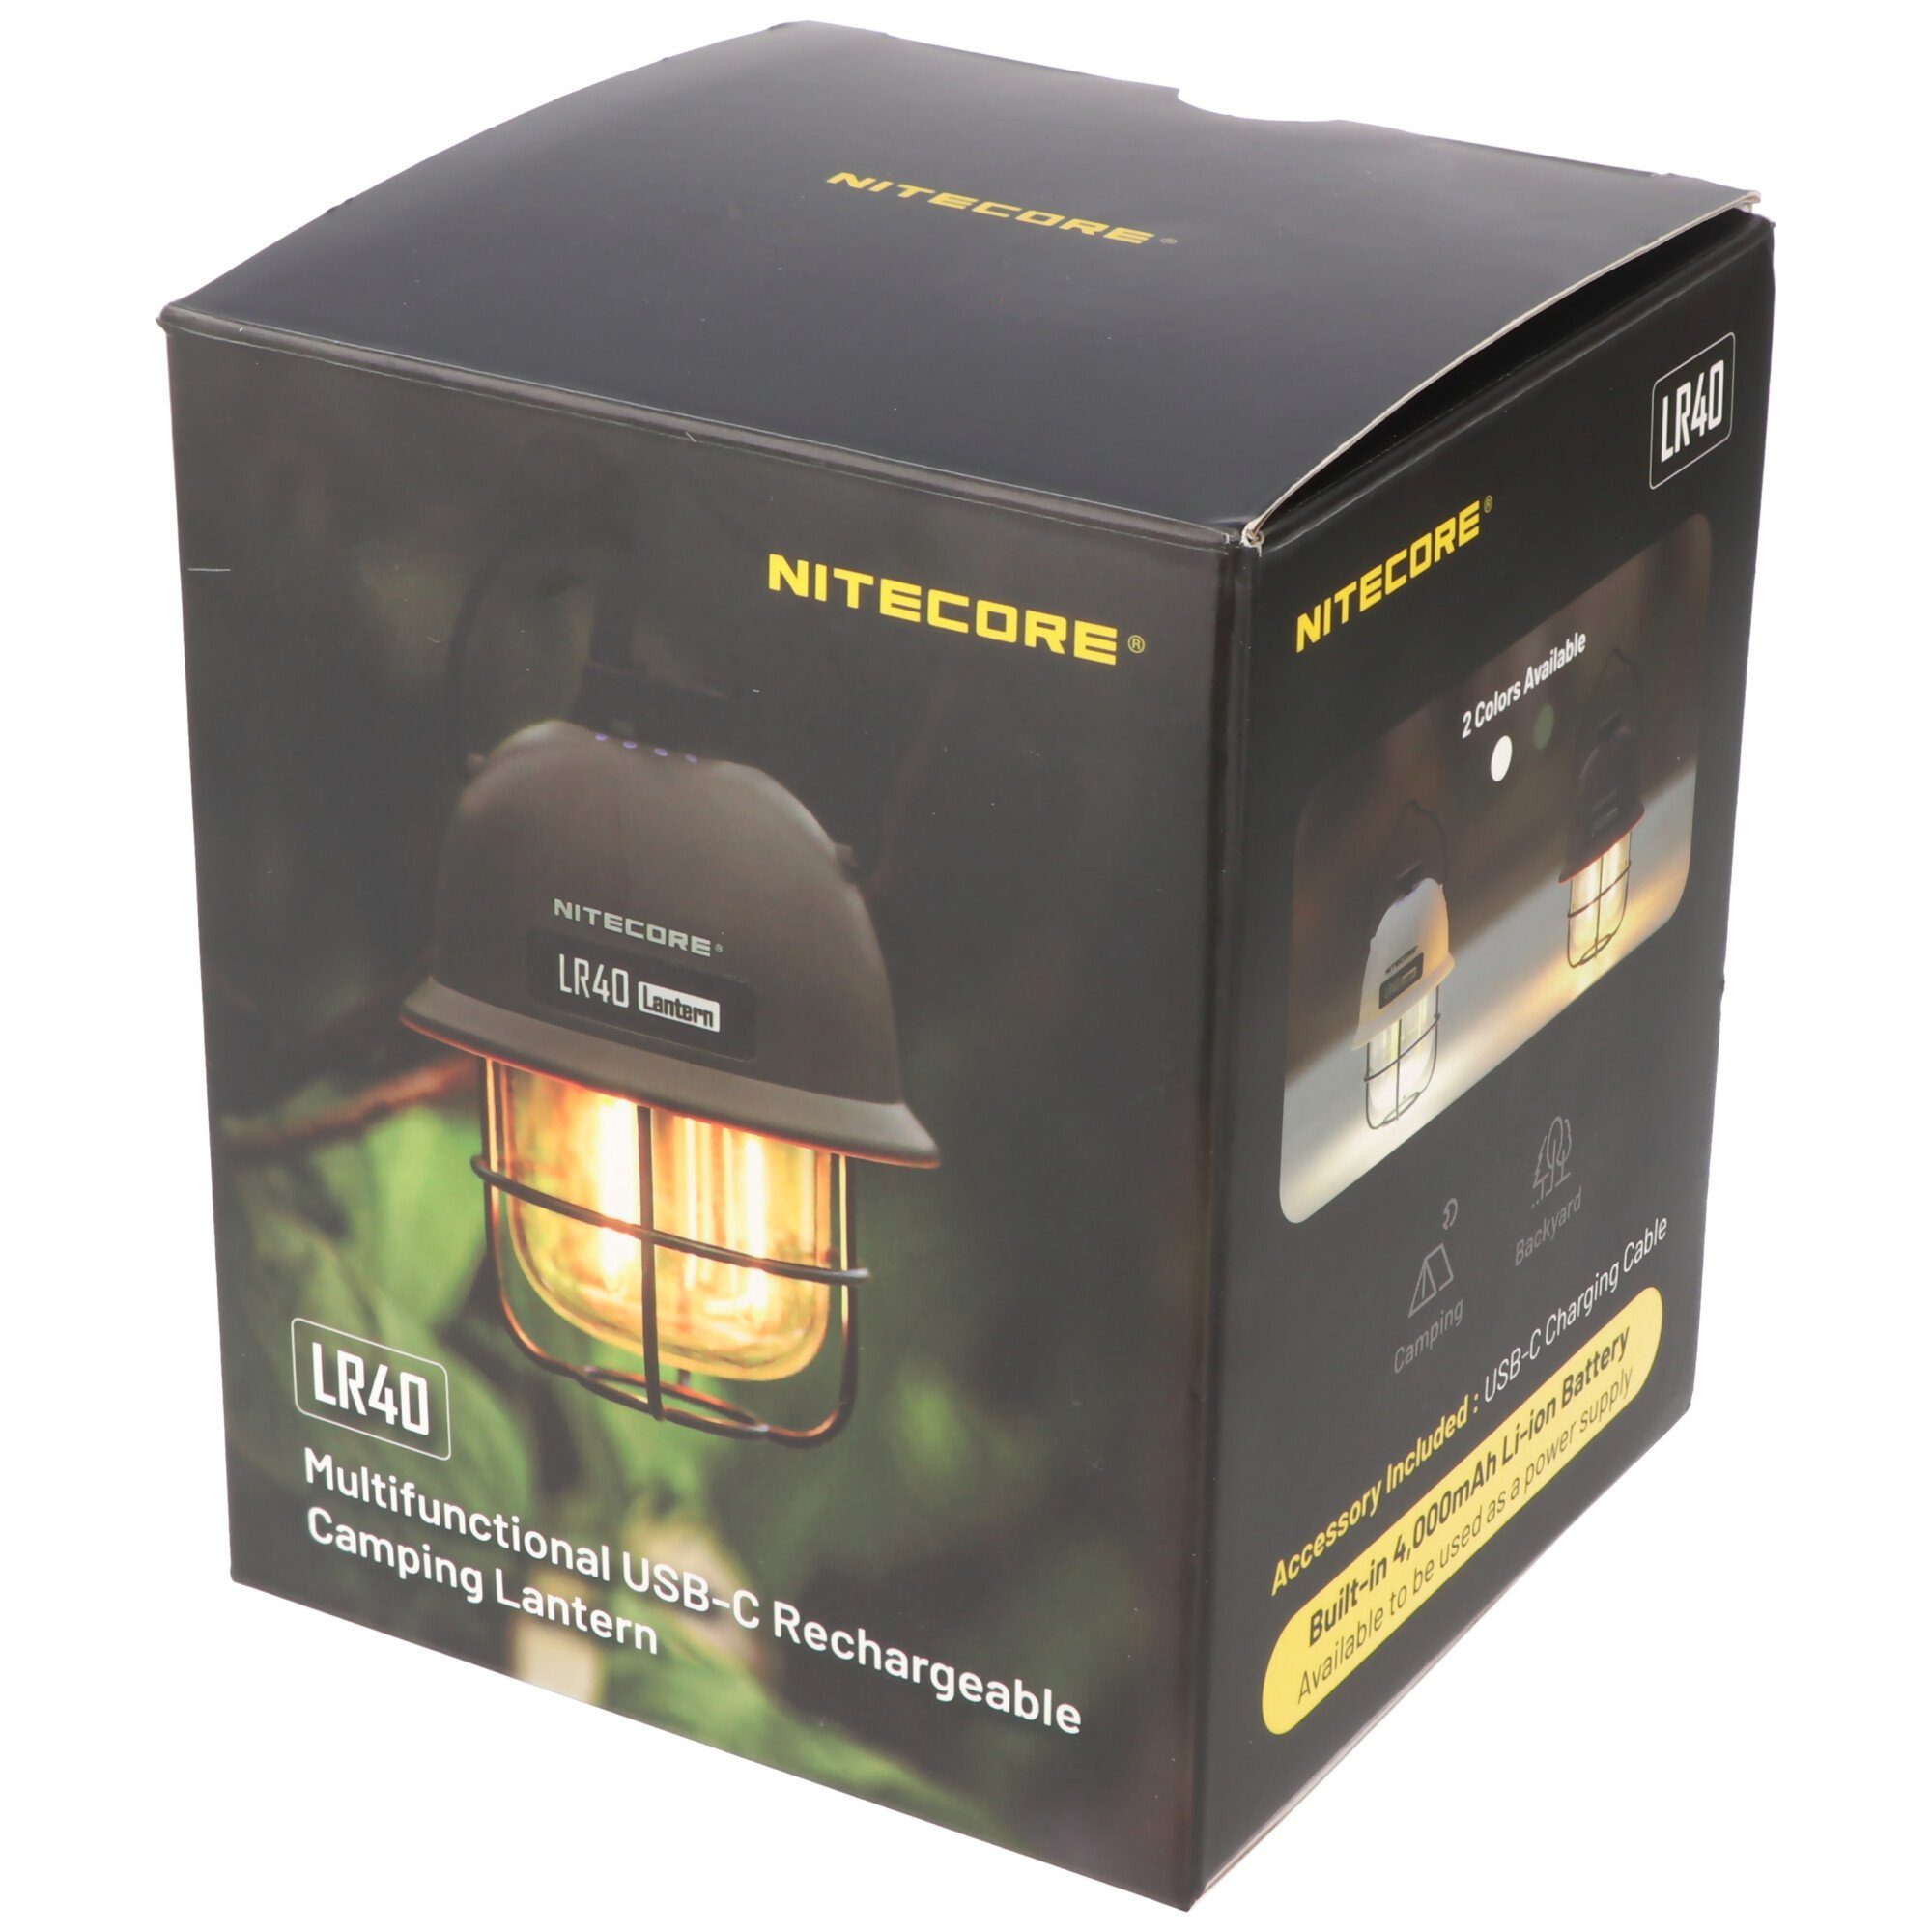 LED Lichtfarben, 2 Oliv Camping Nitecore LED mit LR40 Taschenlampe Akku inkl. Leuchte Nitecore